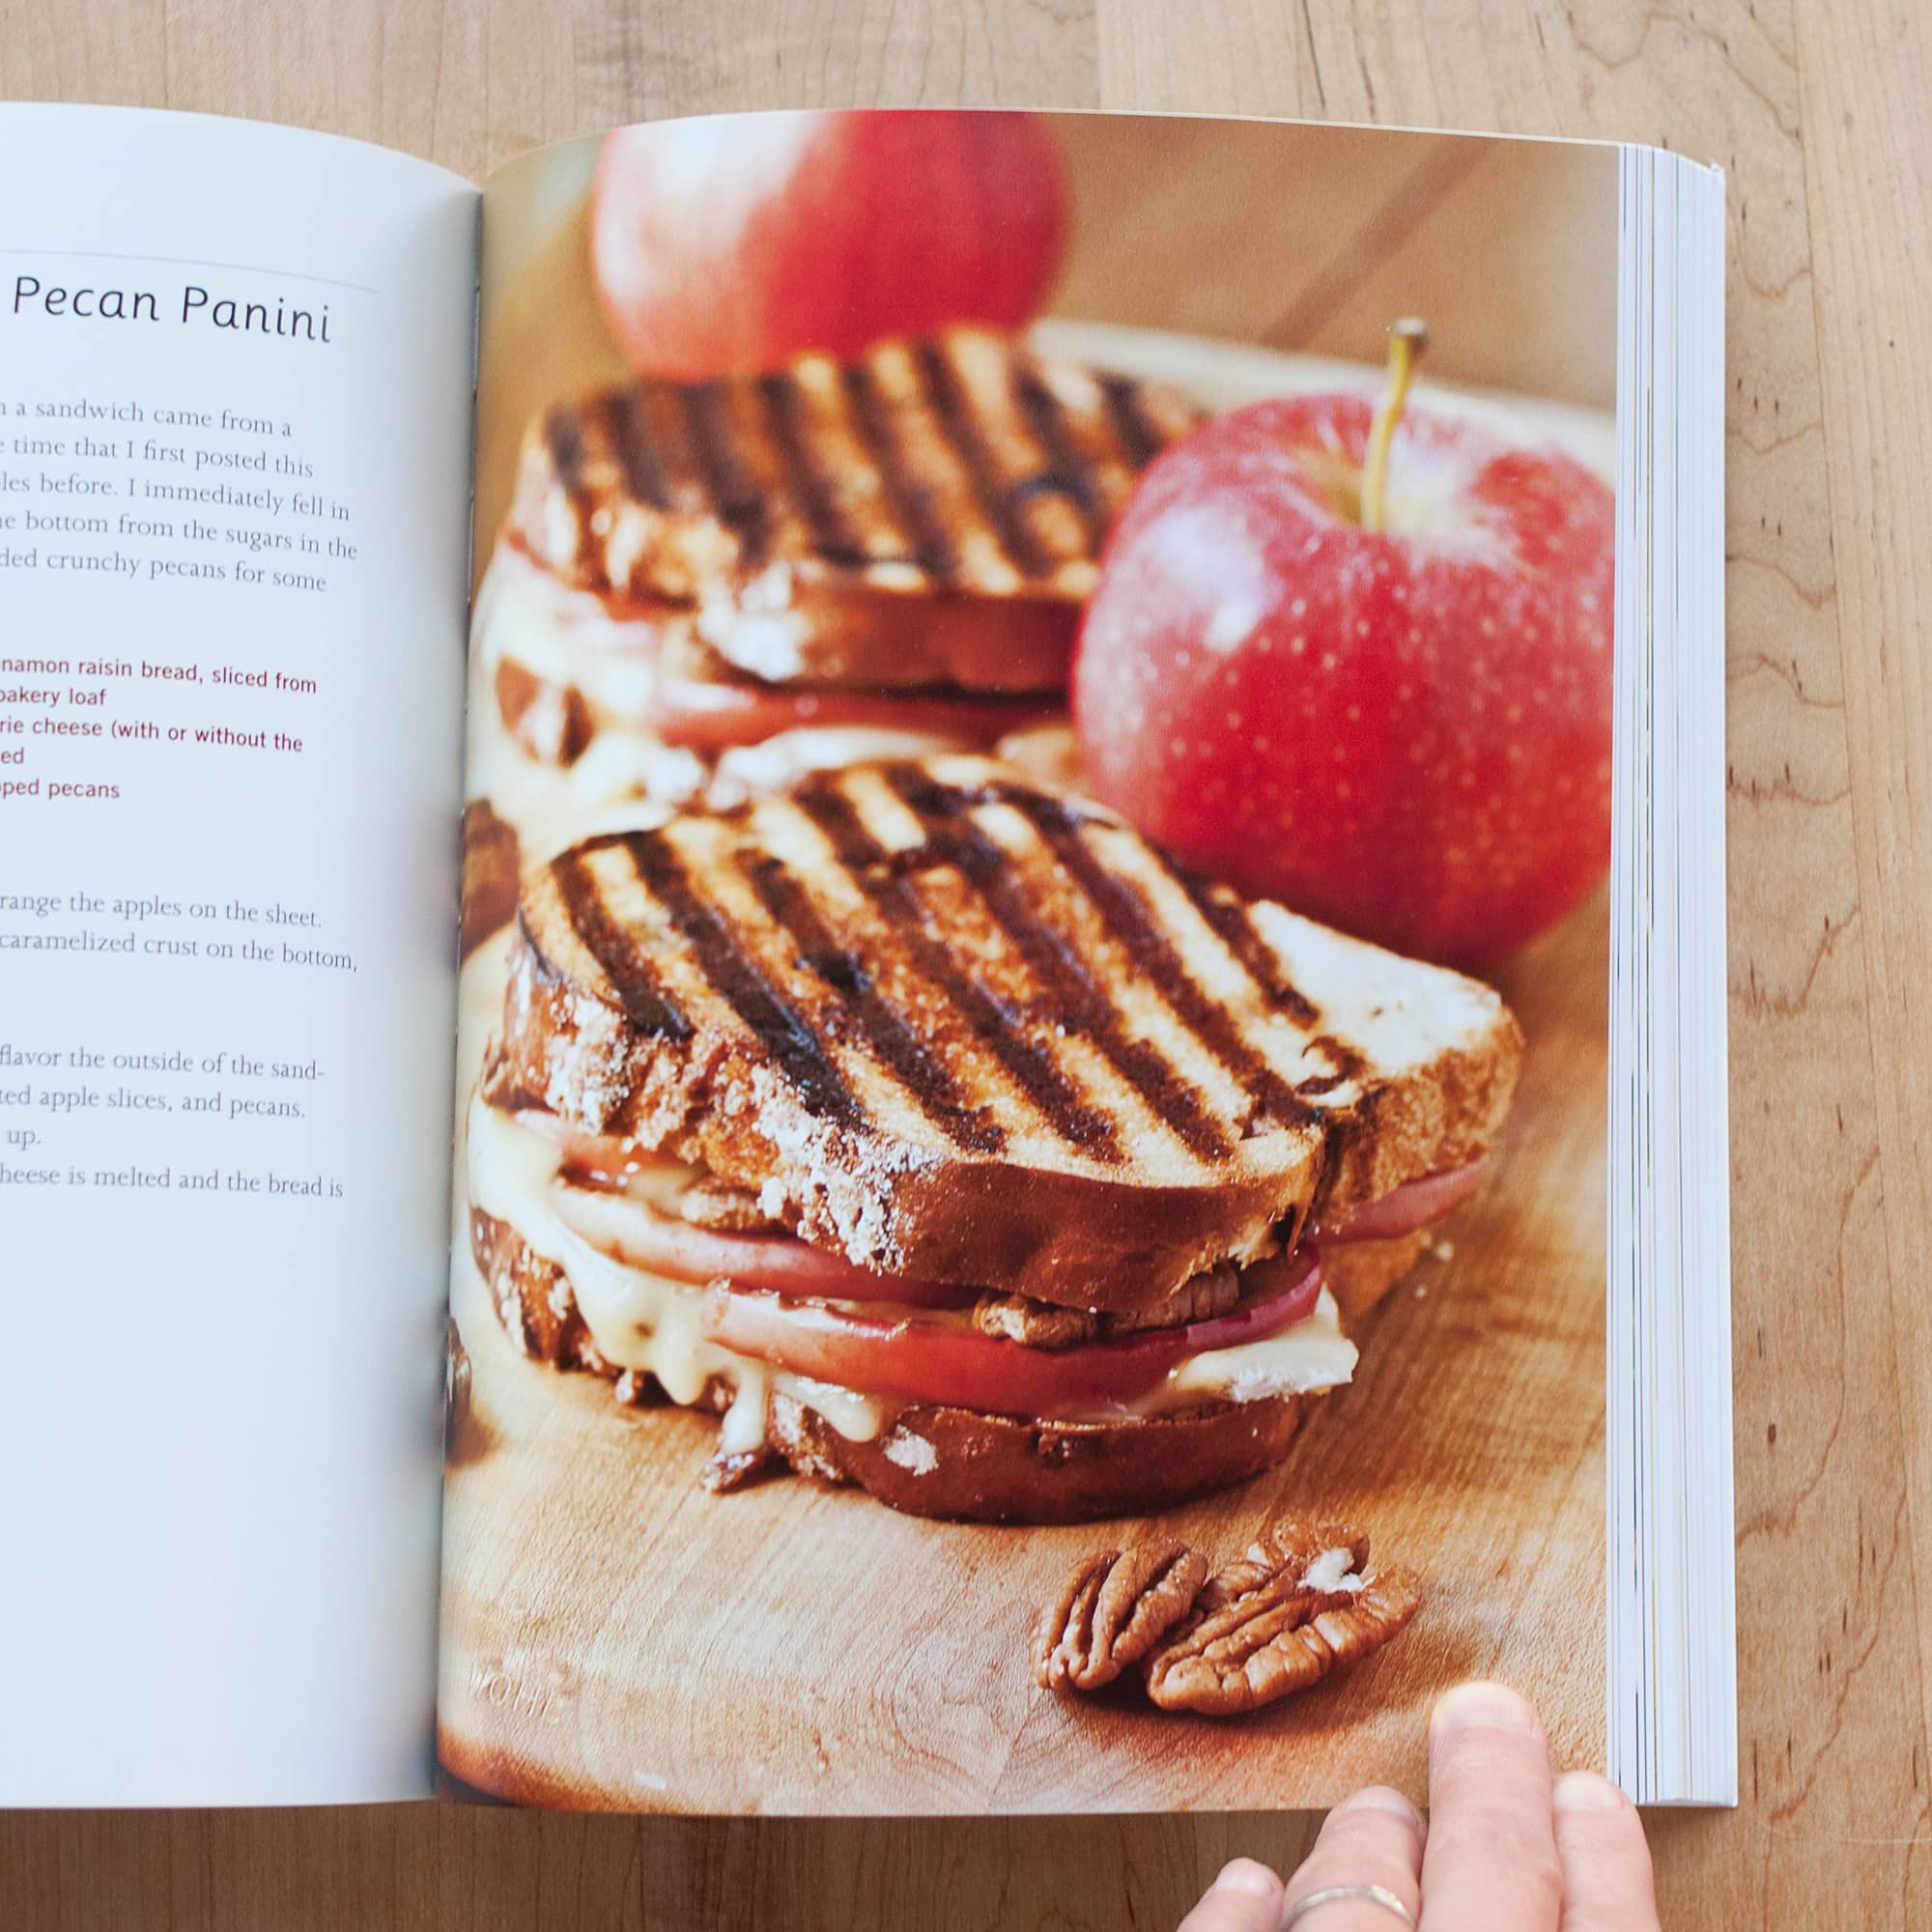 Panini Recipes Books
 The Ultimate Panini Press Cookbook by Kathy Strahs